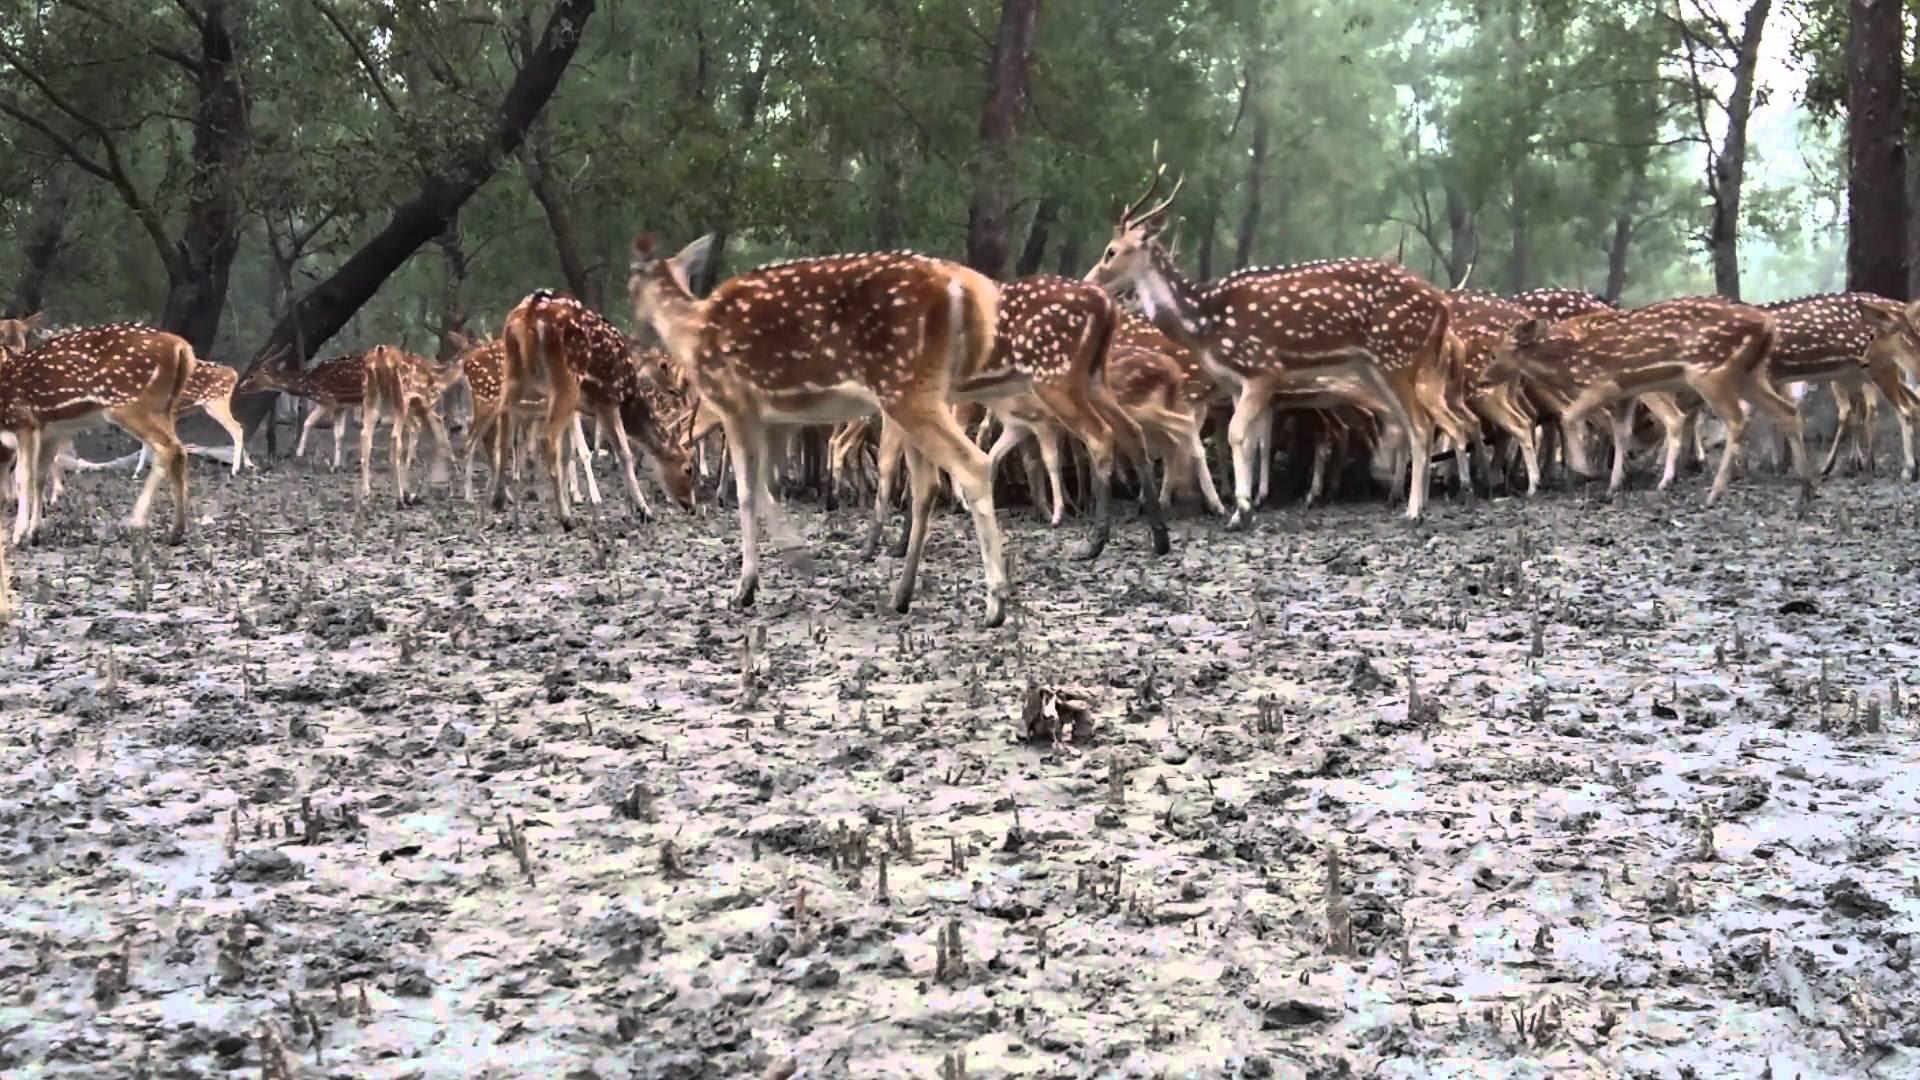 Hd Image Of Sundarban